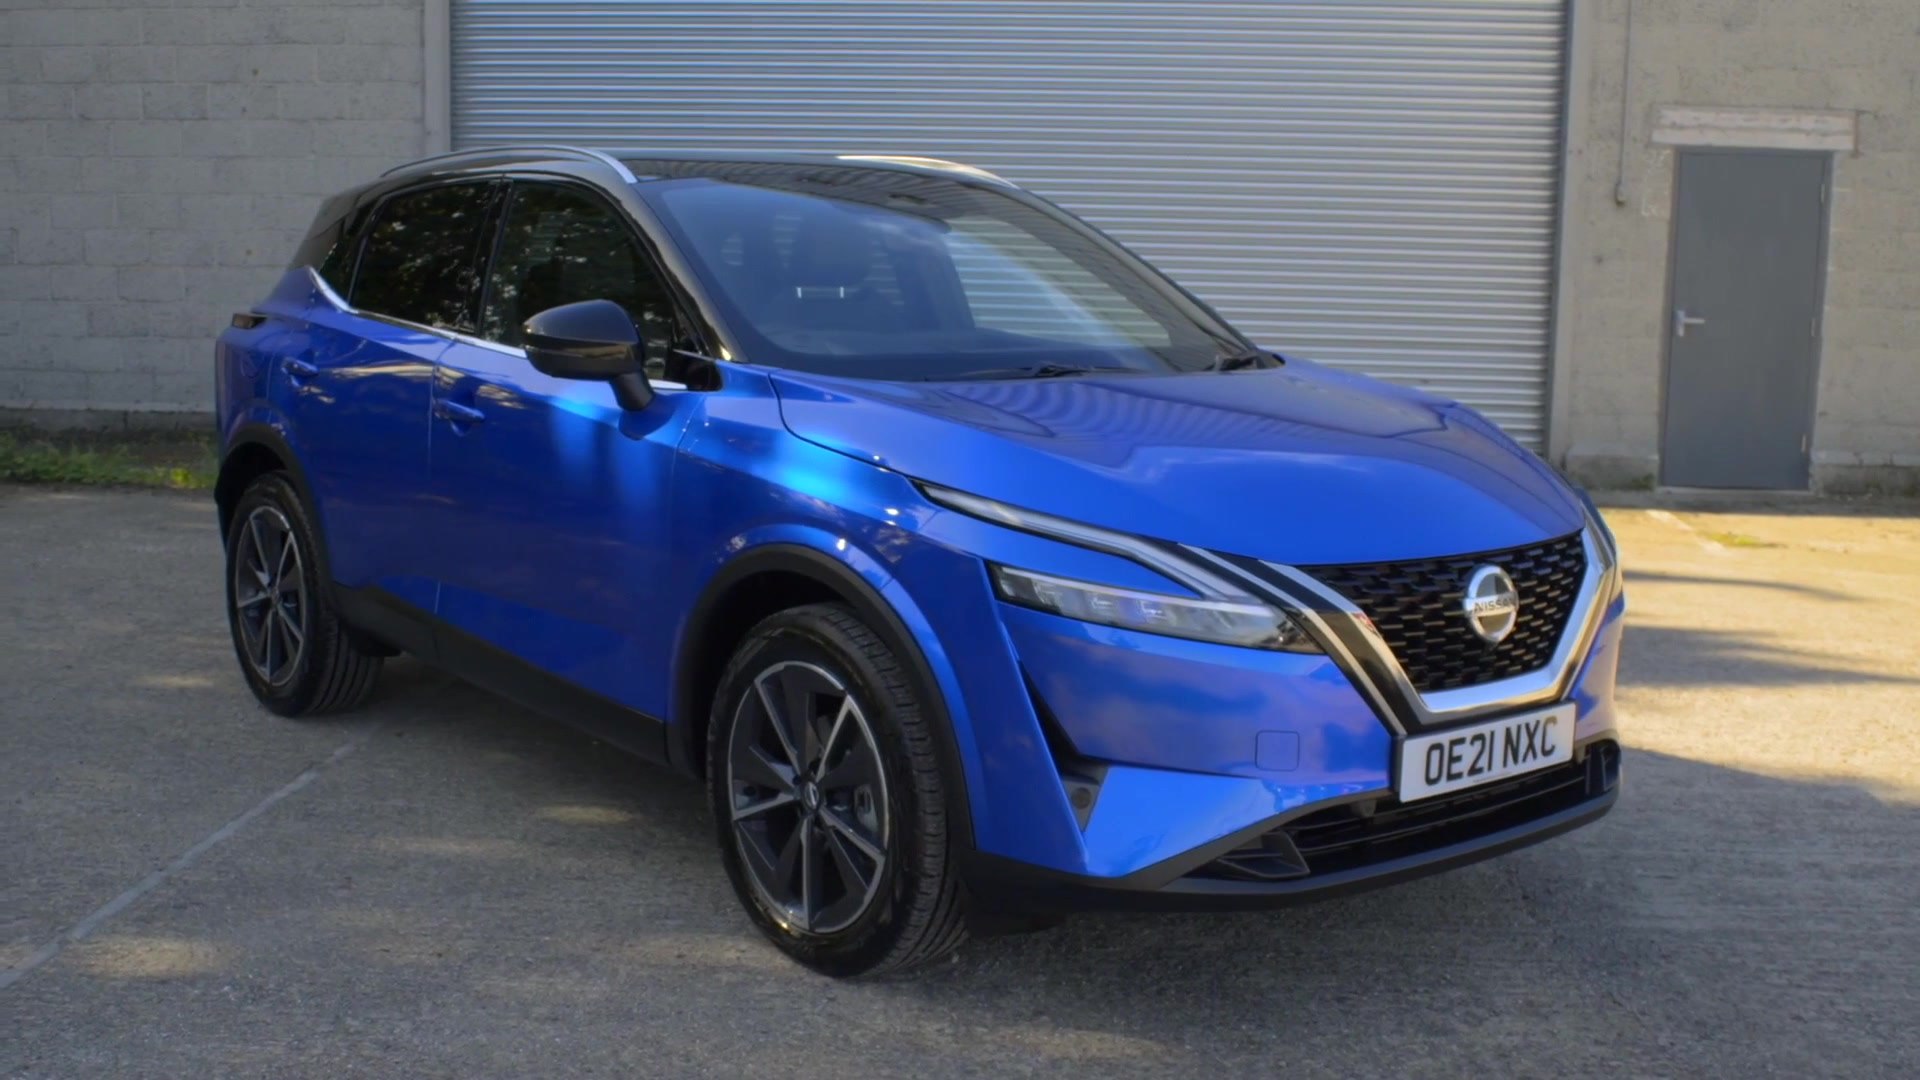 New Nissan Qashqai Tekna Magnetic Blue Exterior Design - video Dailymotion